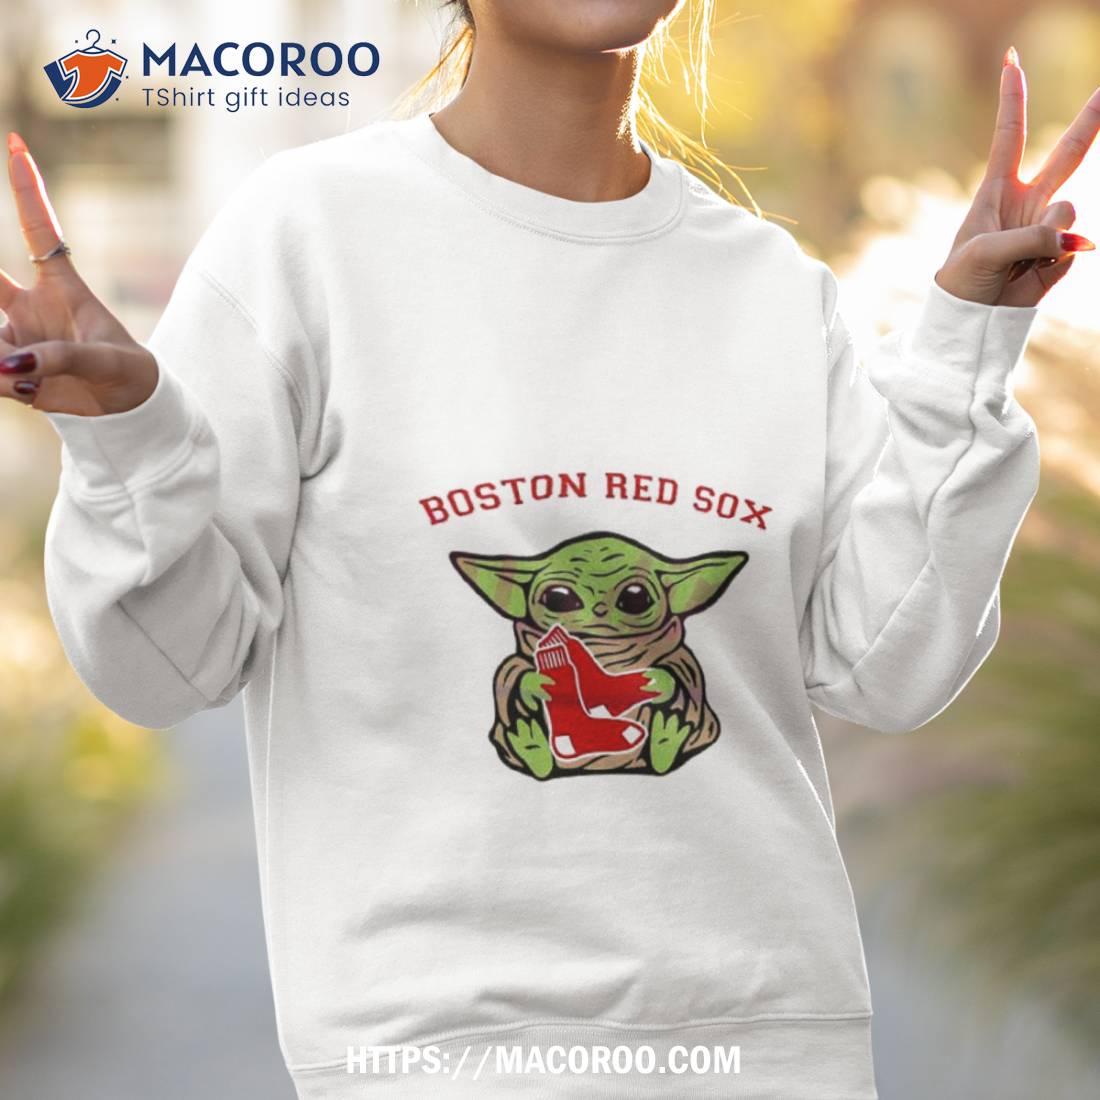 Boston Red Sox Hoodie, Red Sox Sweatshirts, Red Sox Fleece